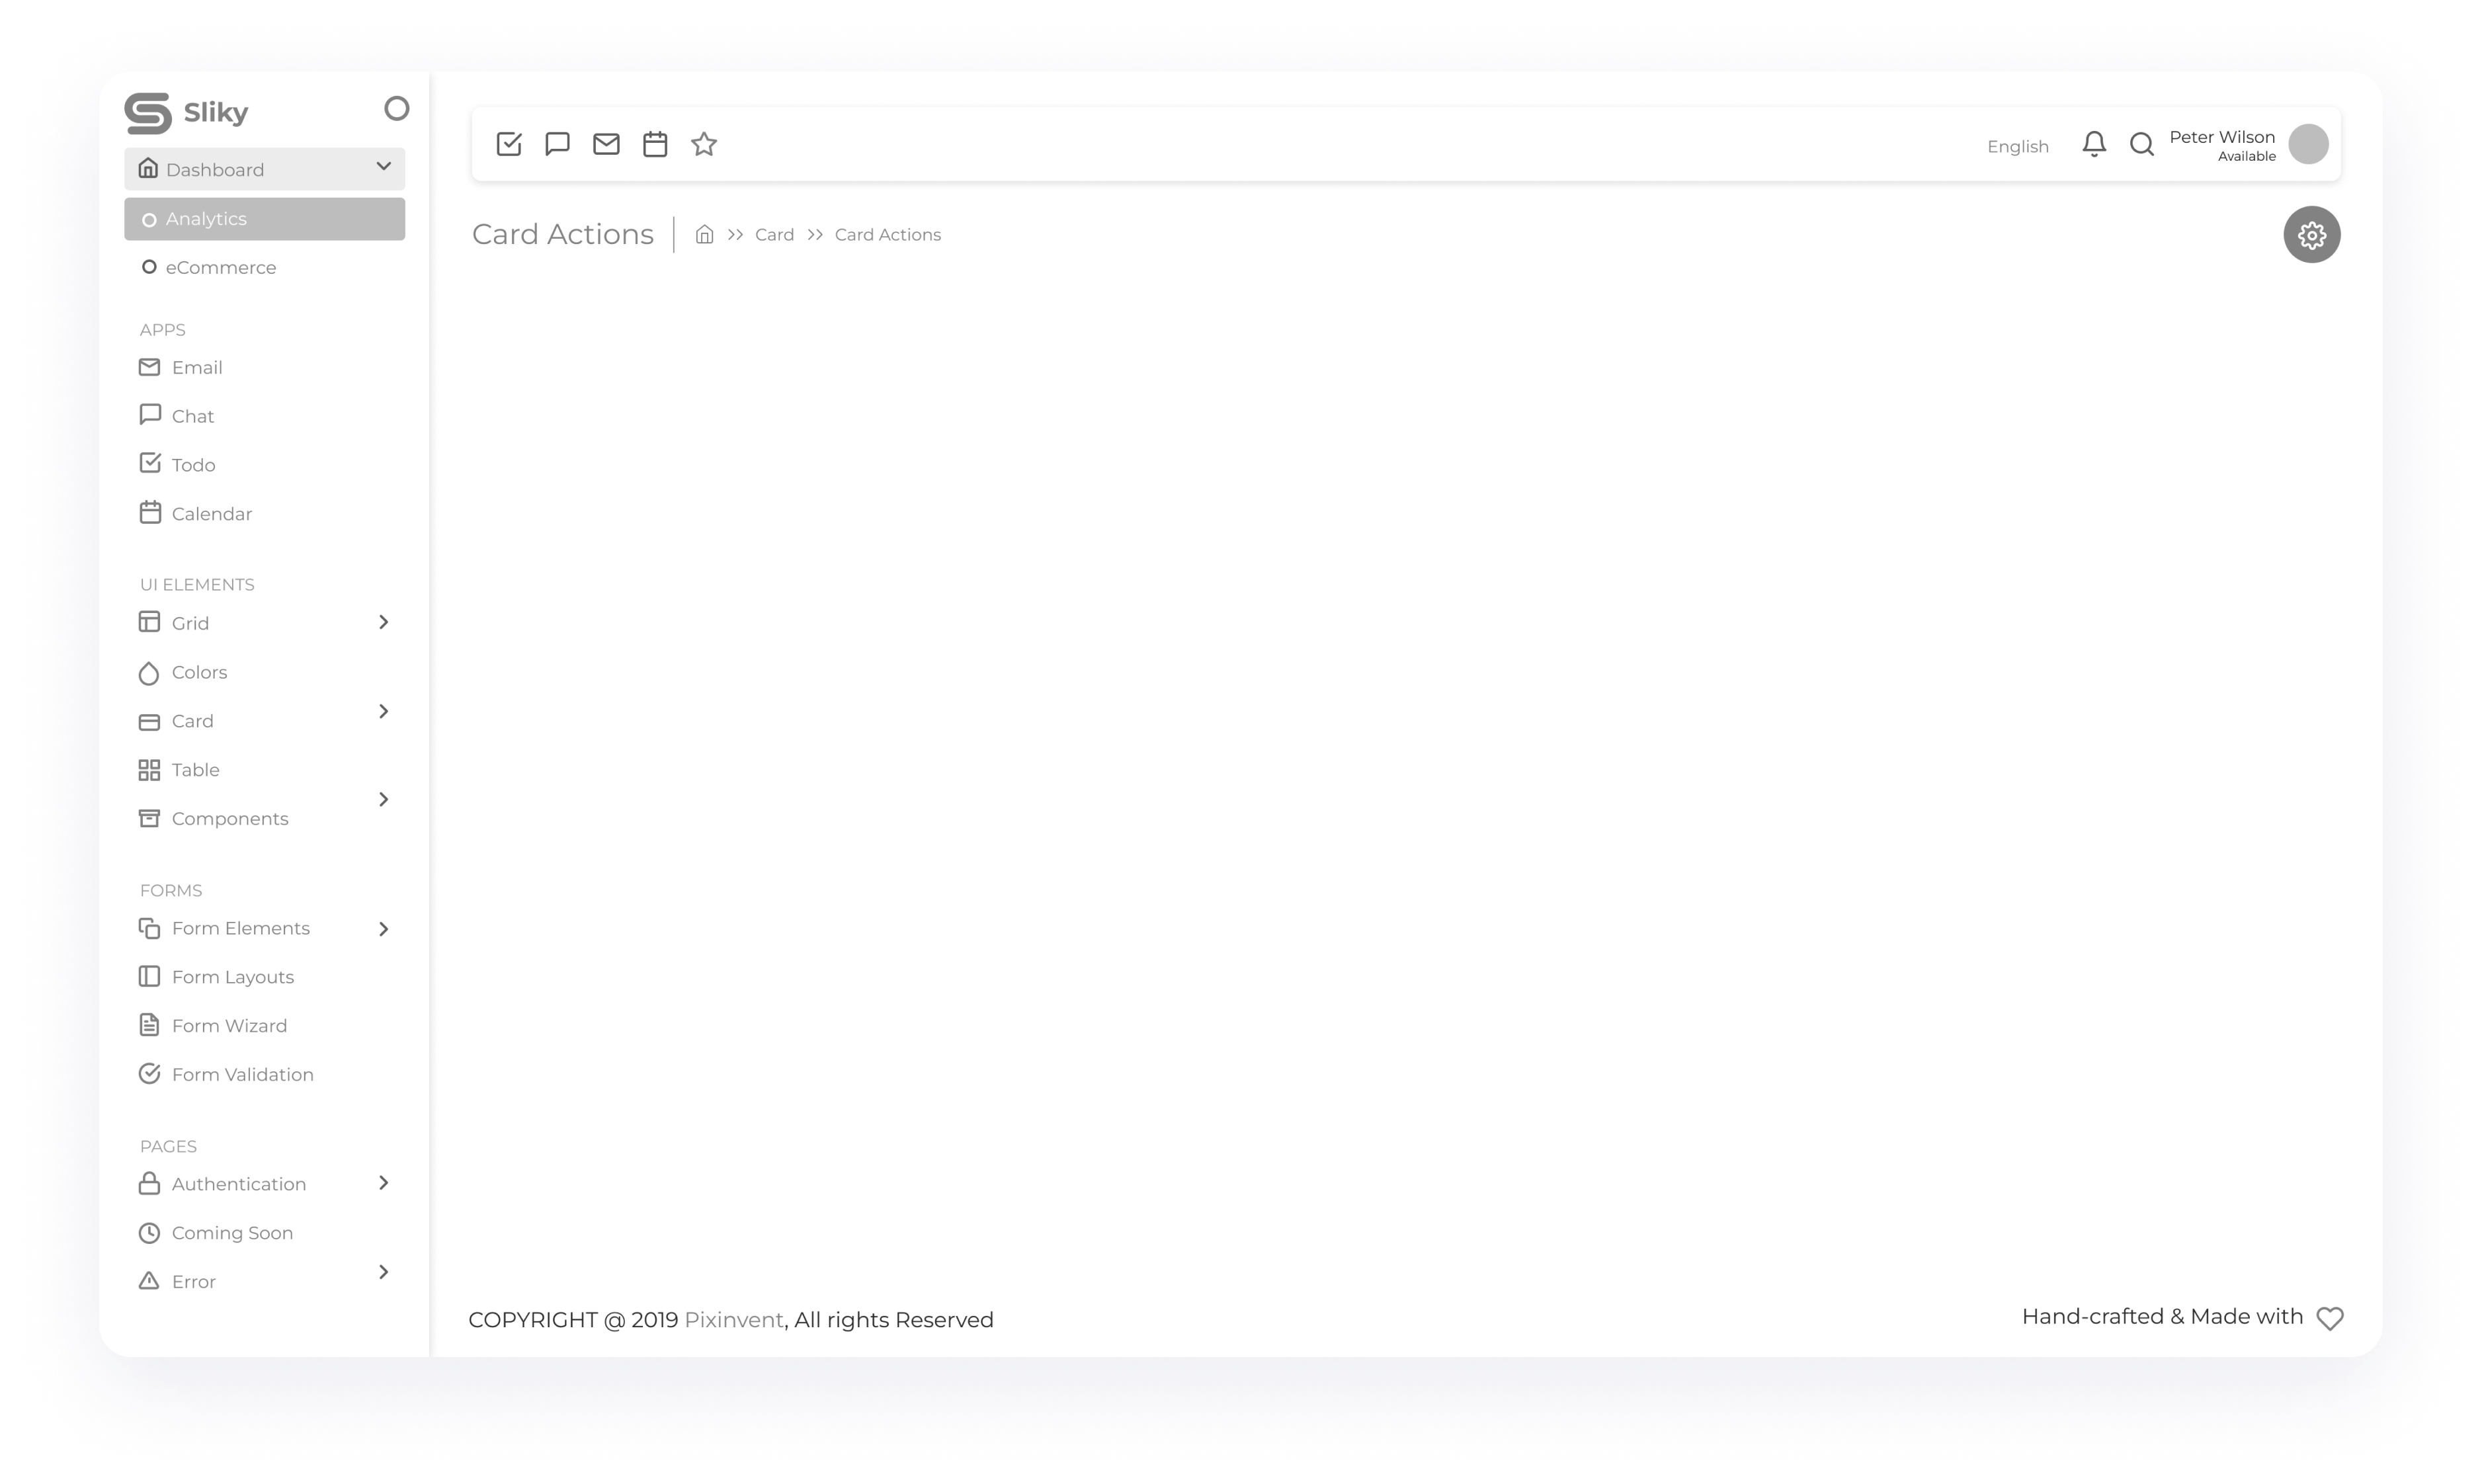  Wireframe mockup of a Sliky CRM task management dashboard screen